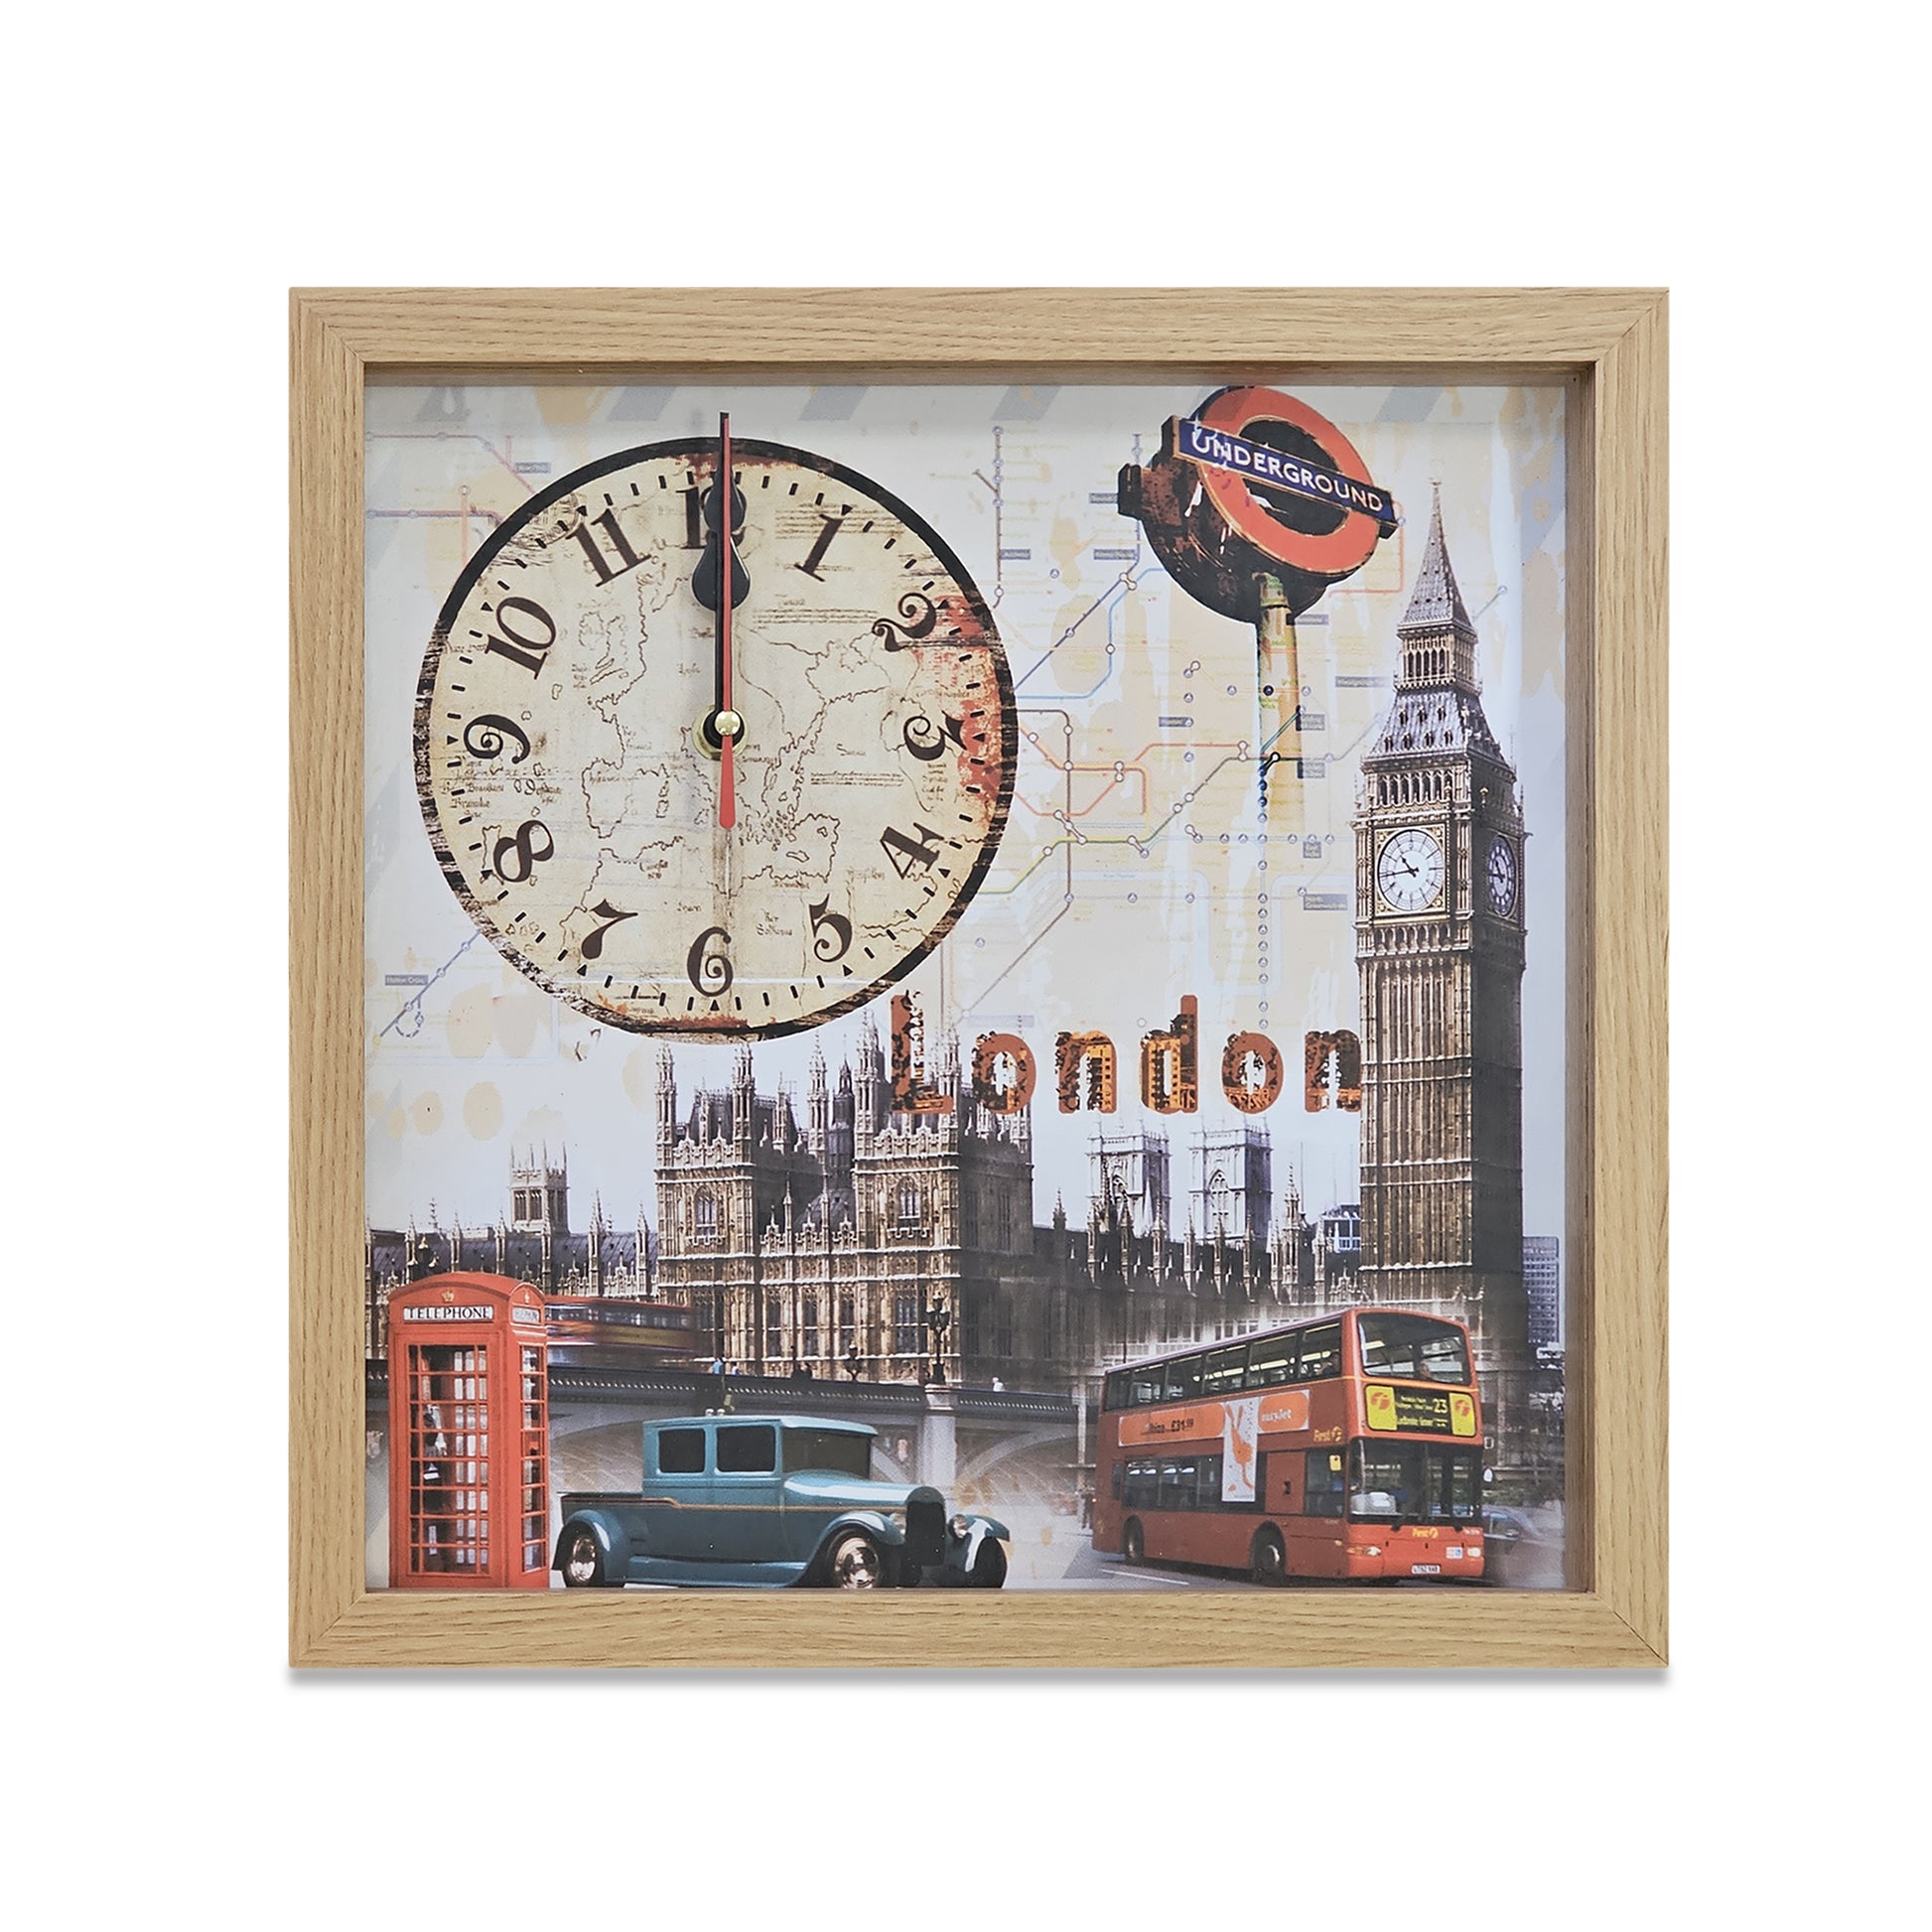 Vintage Style Wall Clock Tower Art Painting London Big Ben Clock~5317